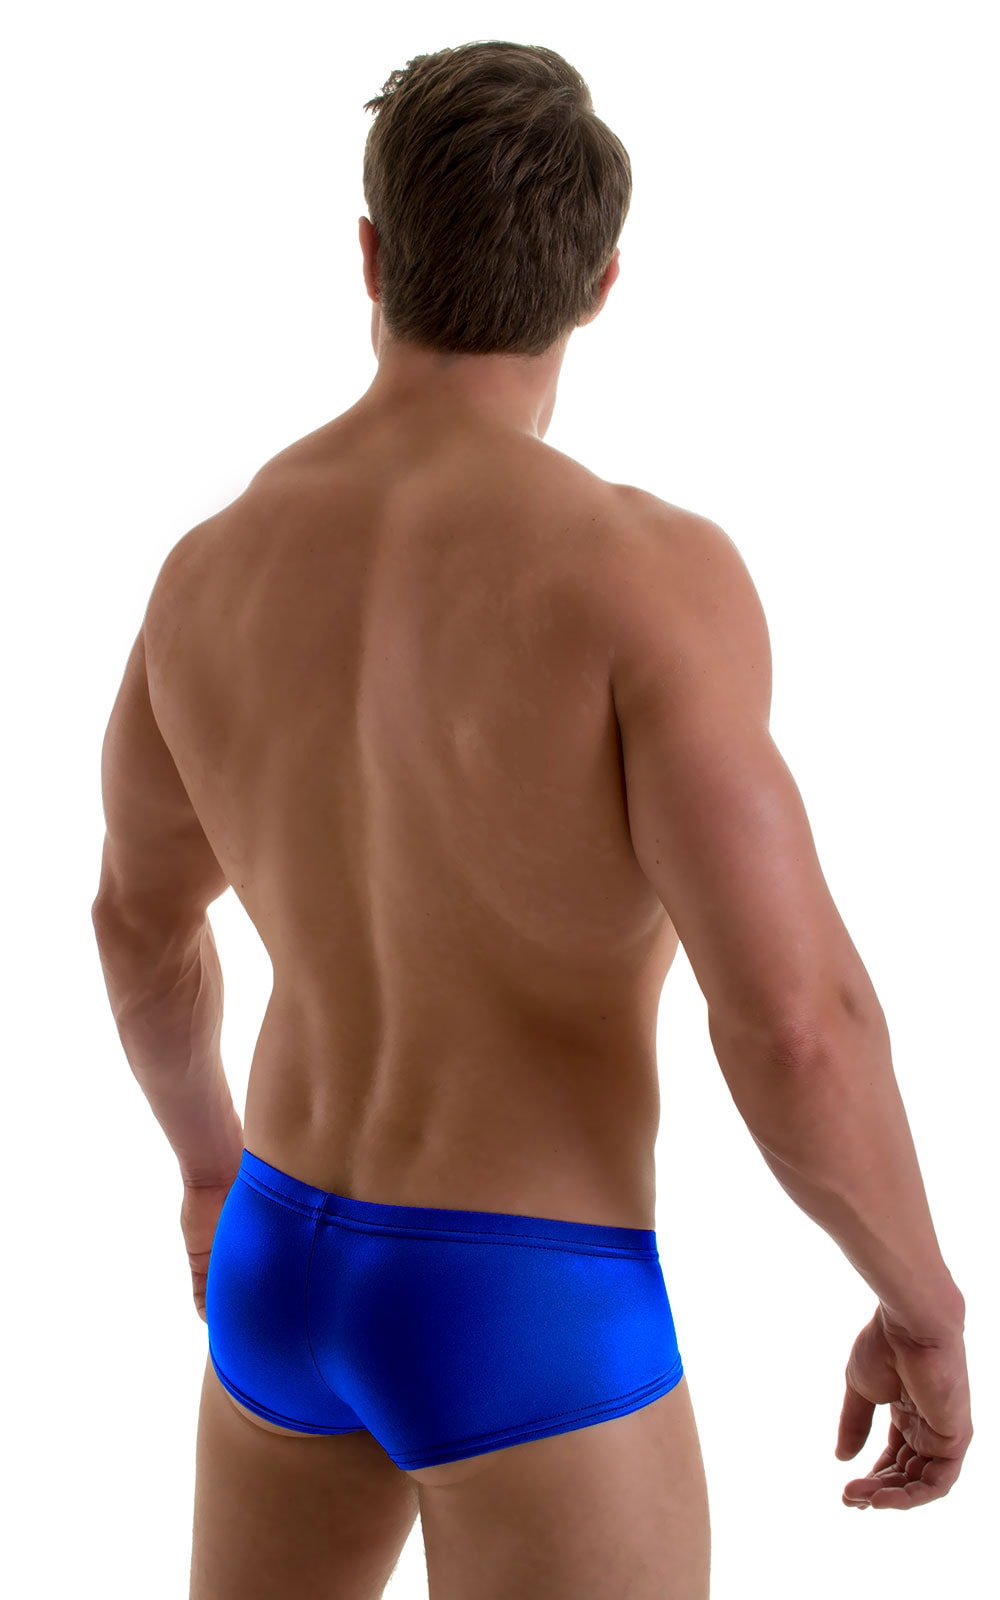 Pouch Enhanced Micro Swim Trunks in Royal Blue, Rear View